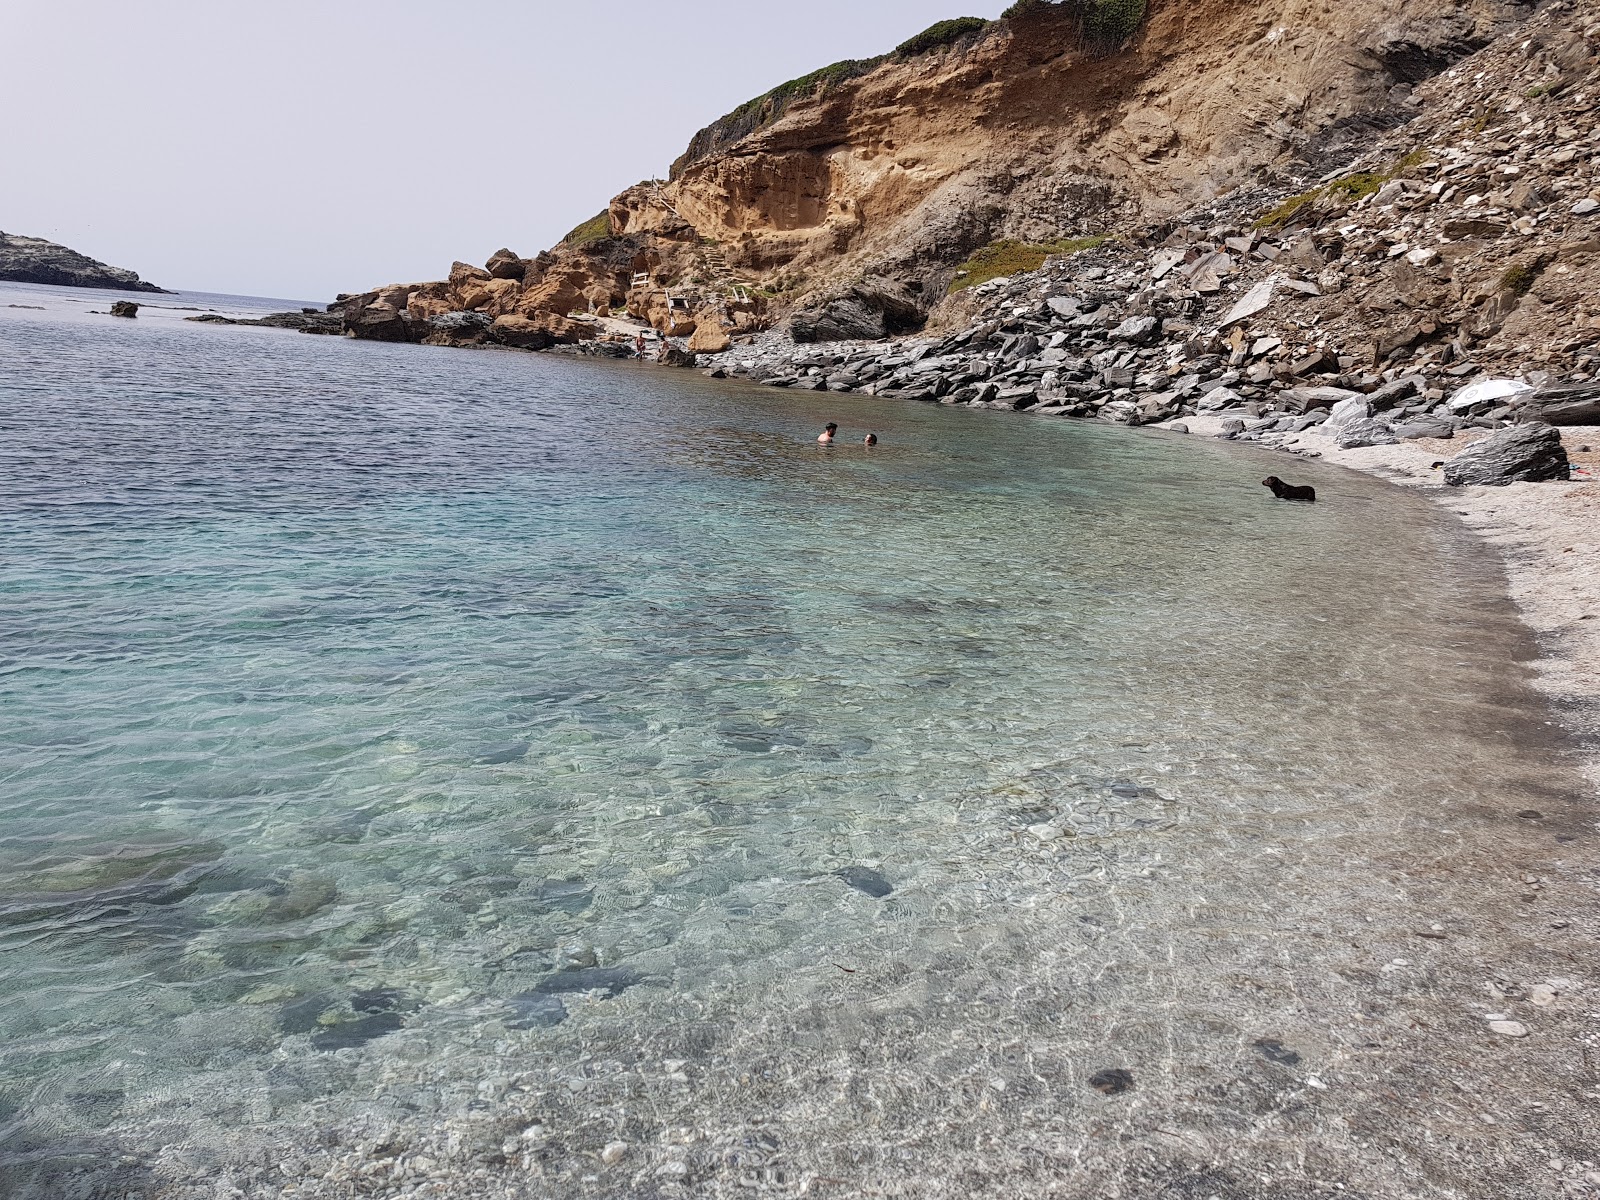 Foto van Spiaggia della Nurra met kleine baai